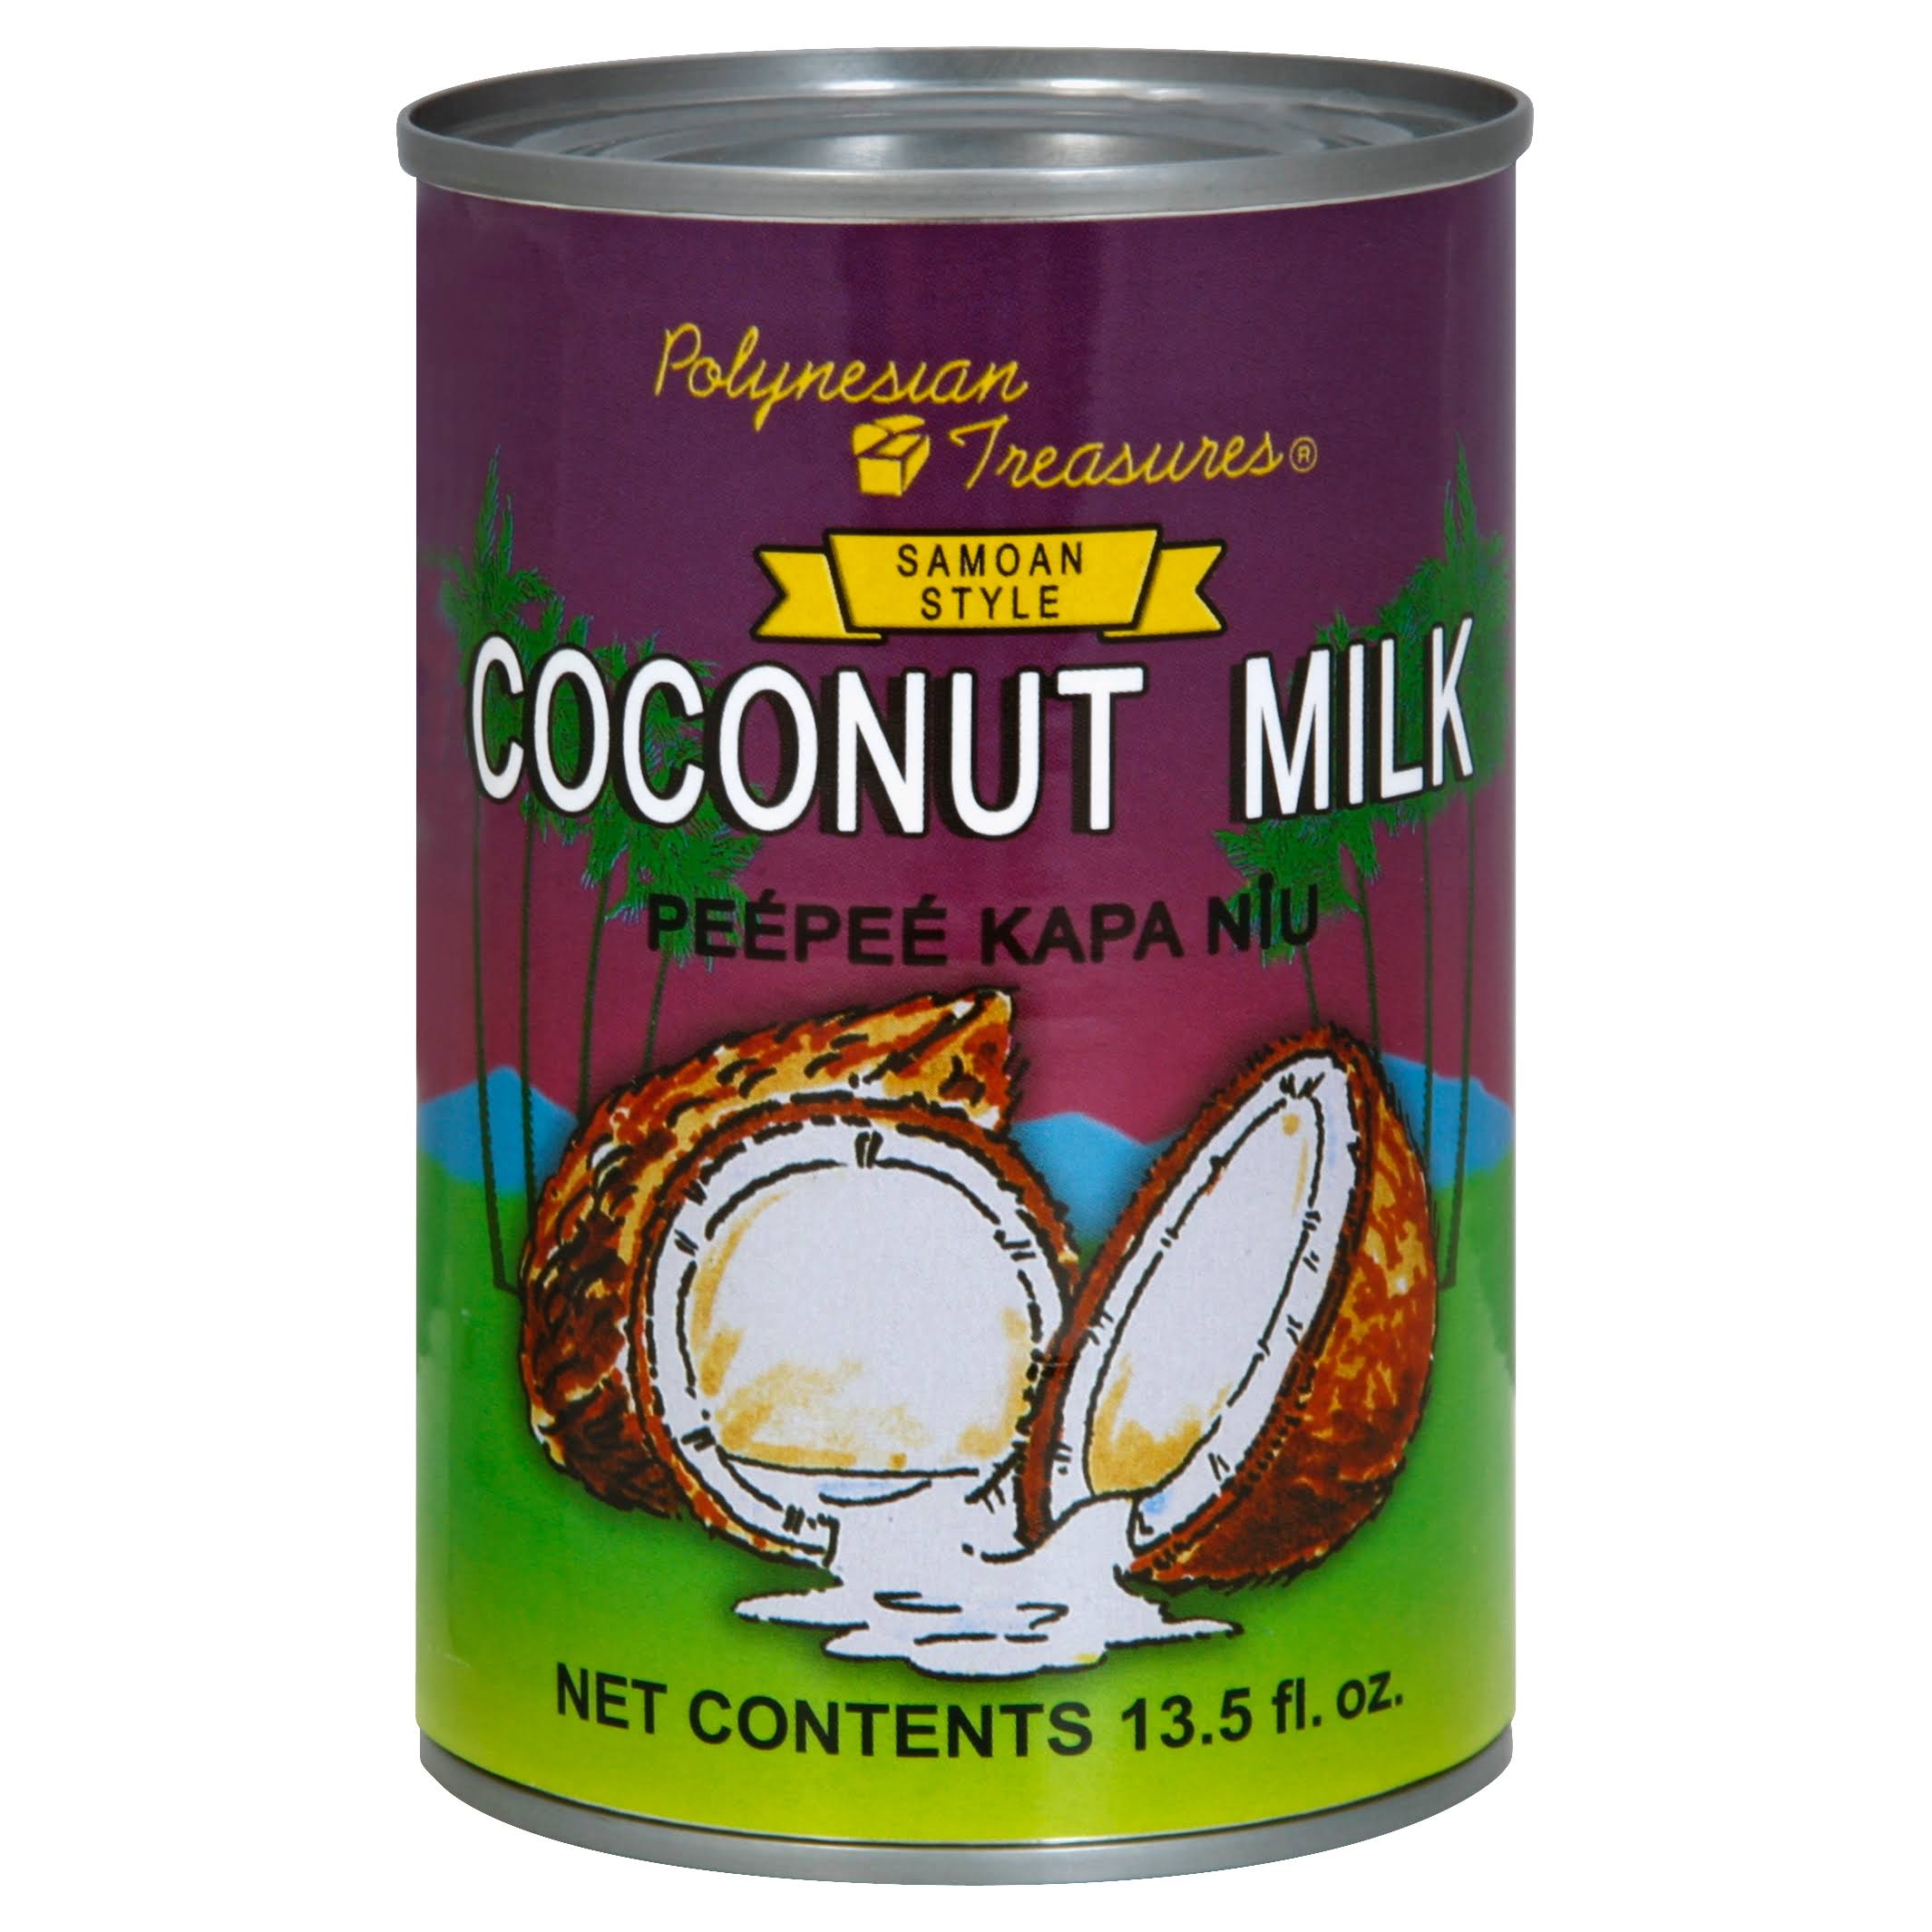 Polynesian Treasures Coconut Milk, Samoan Style - 13.5 fl oz